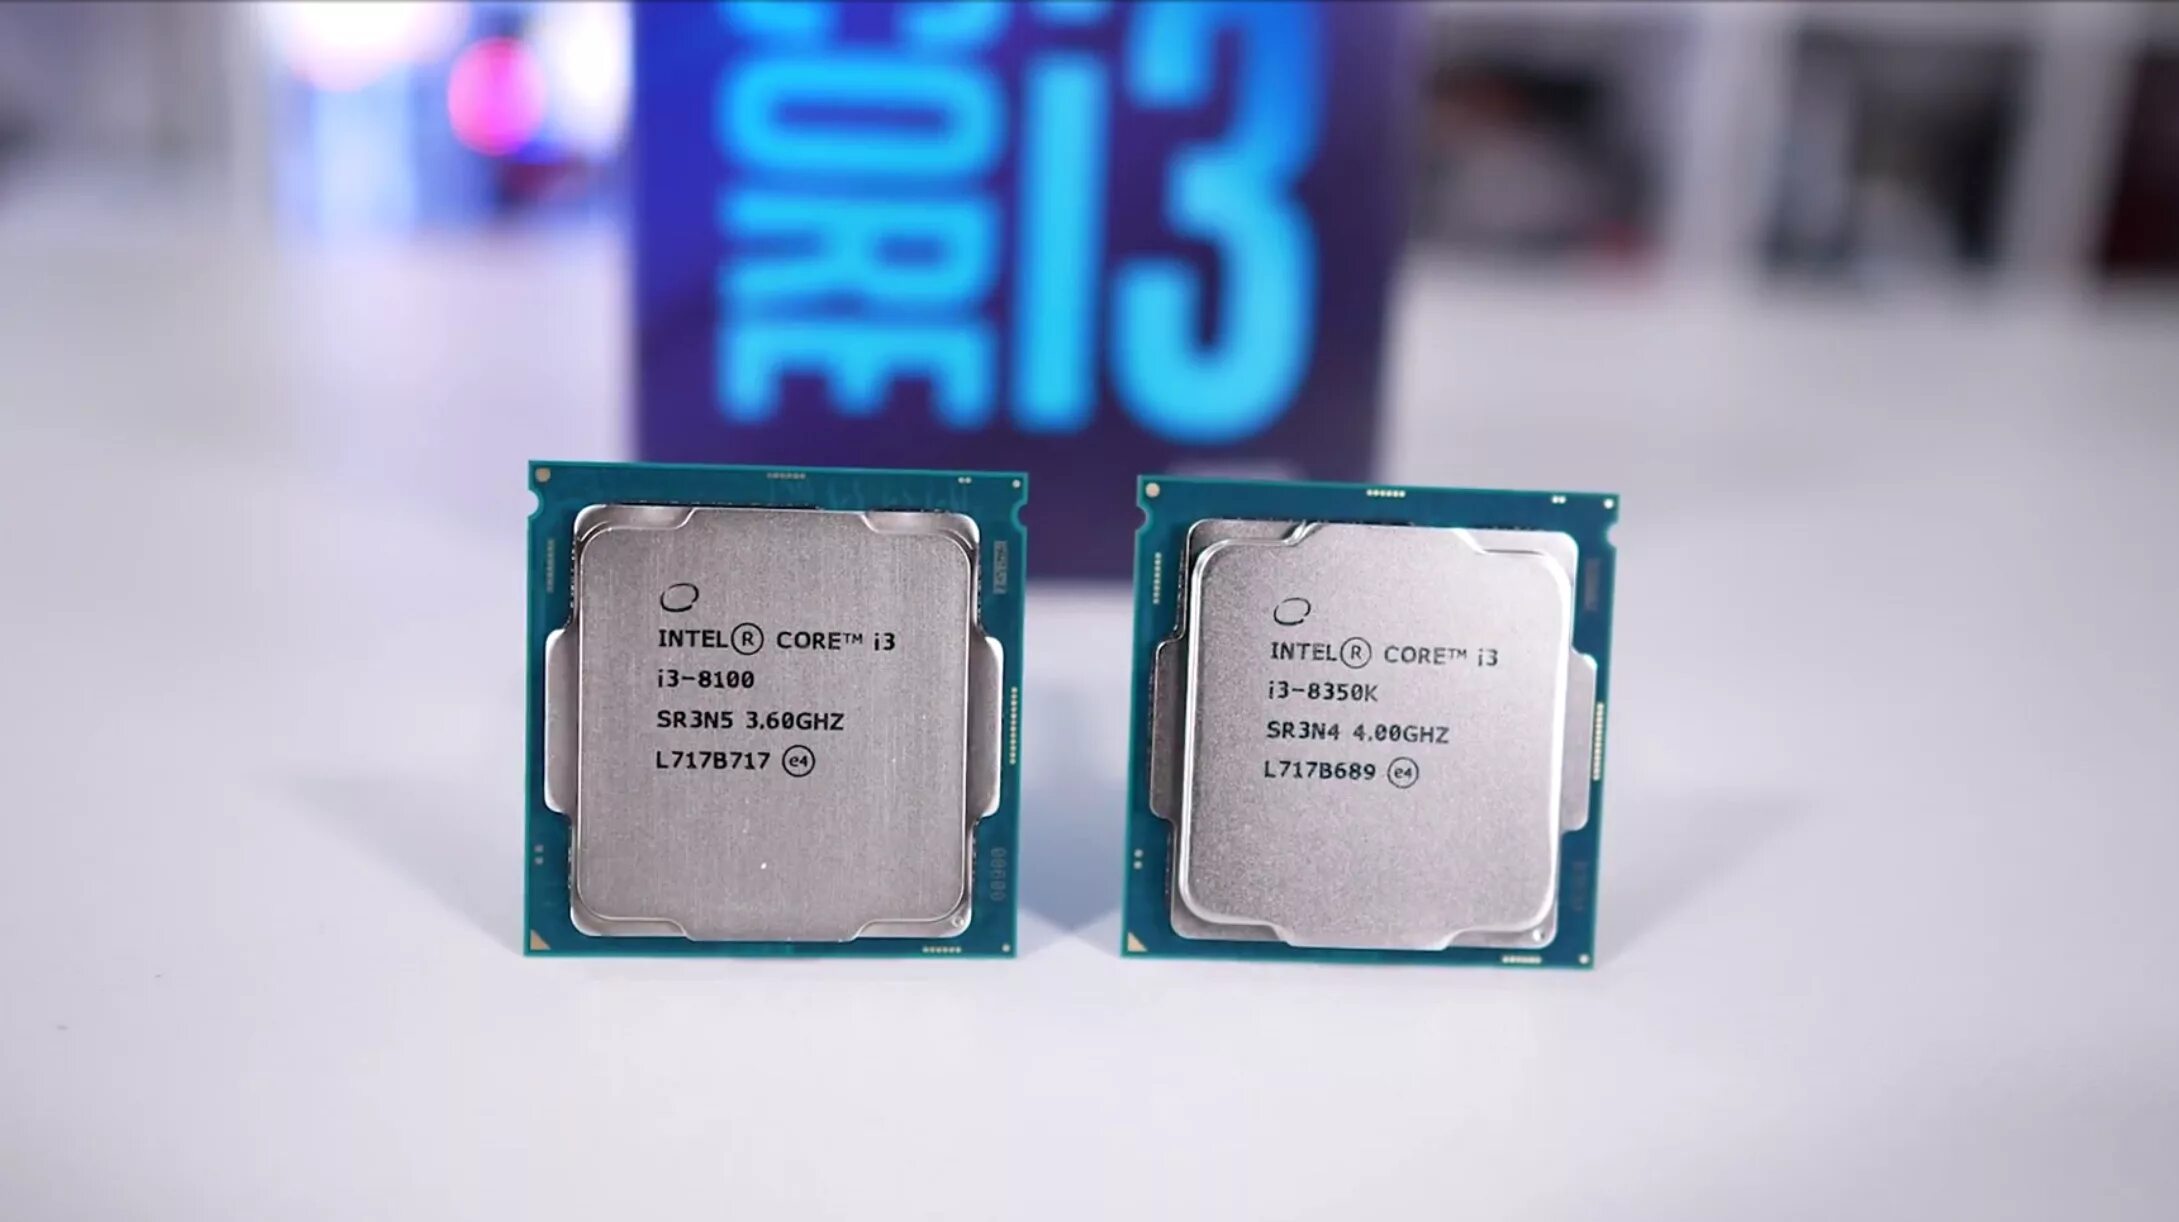 Core i3 8100. Intel(r) Core(TM) i3-8100 CPU @ 3.60GHZ. Intel Core i3 Series. Intel Core i 3 3.60 GHZ. Intel r 4 series